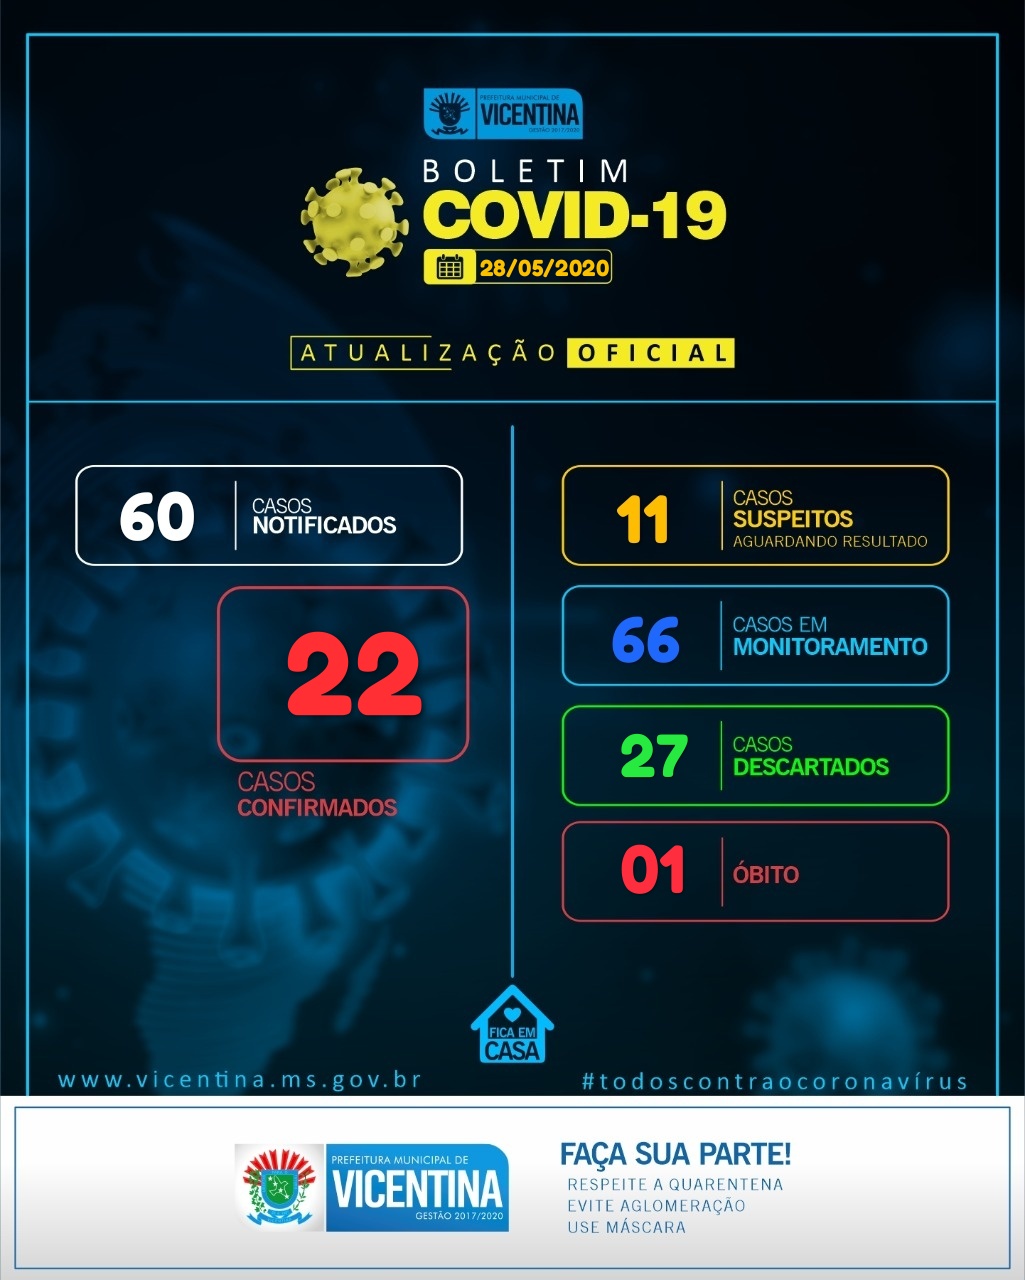 VICENTINA boletim Covid-19